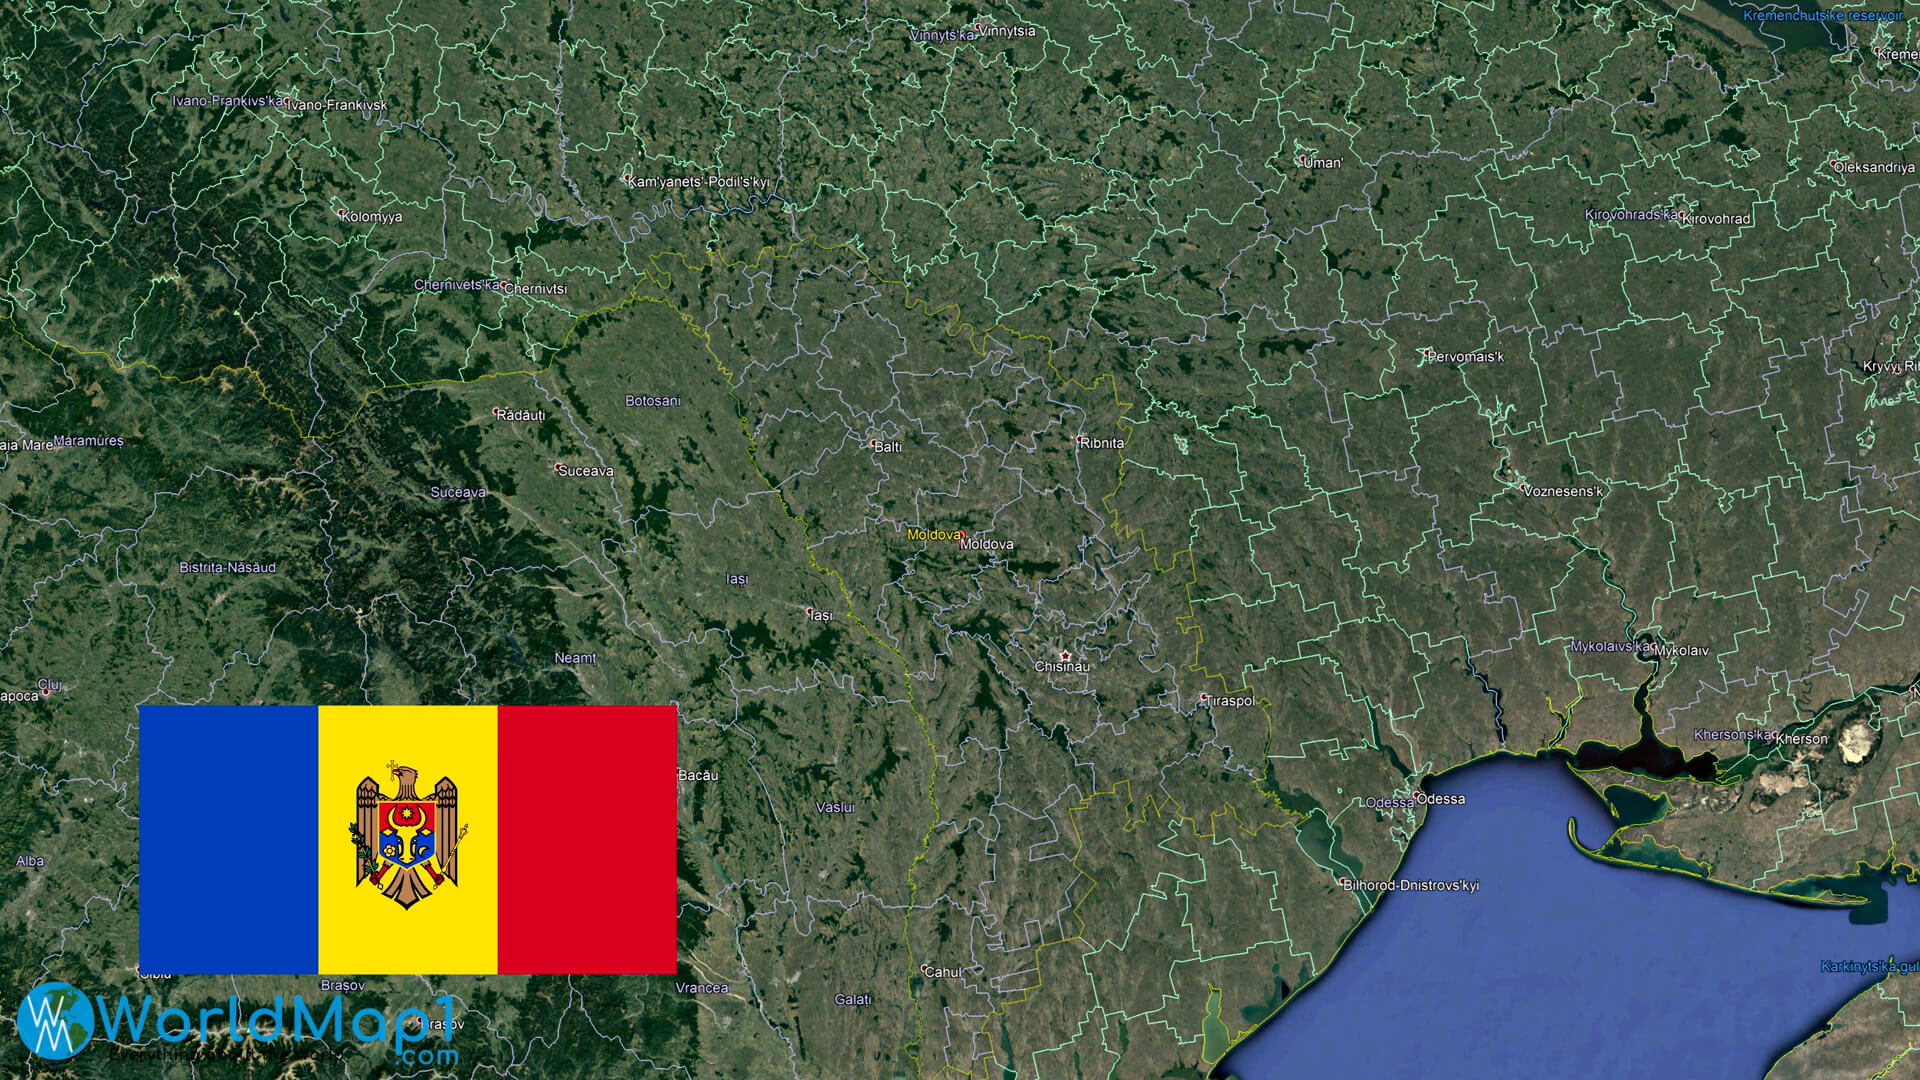 Moldova Google Map with Flag